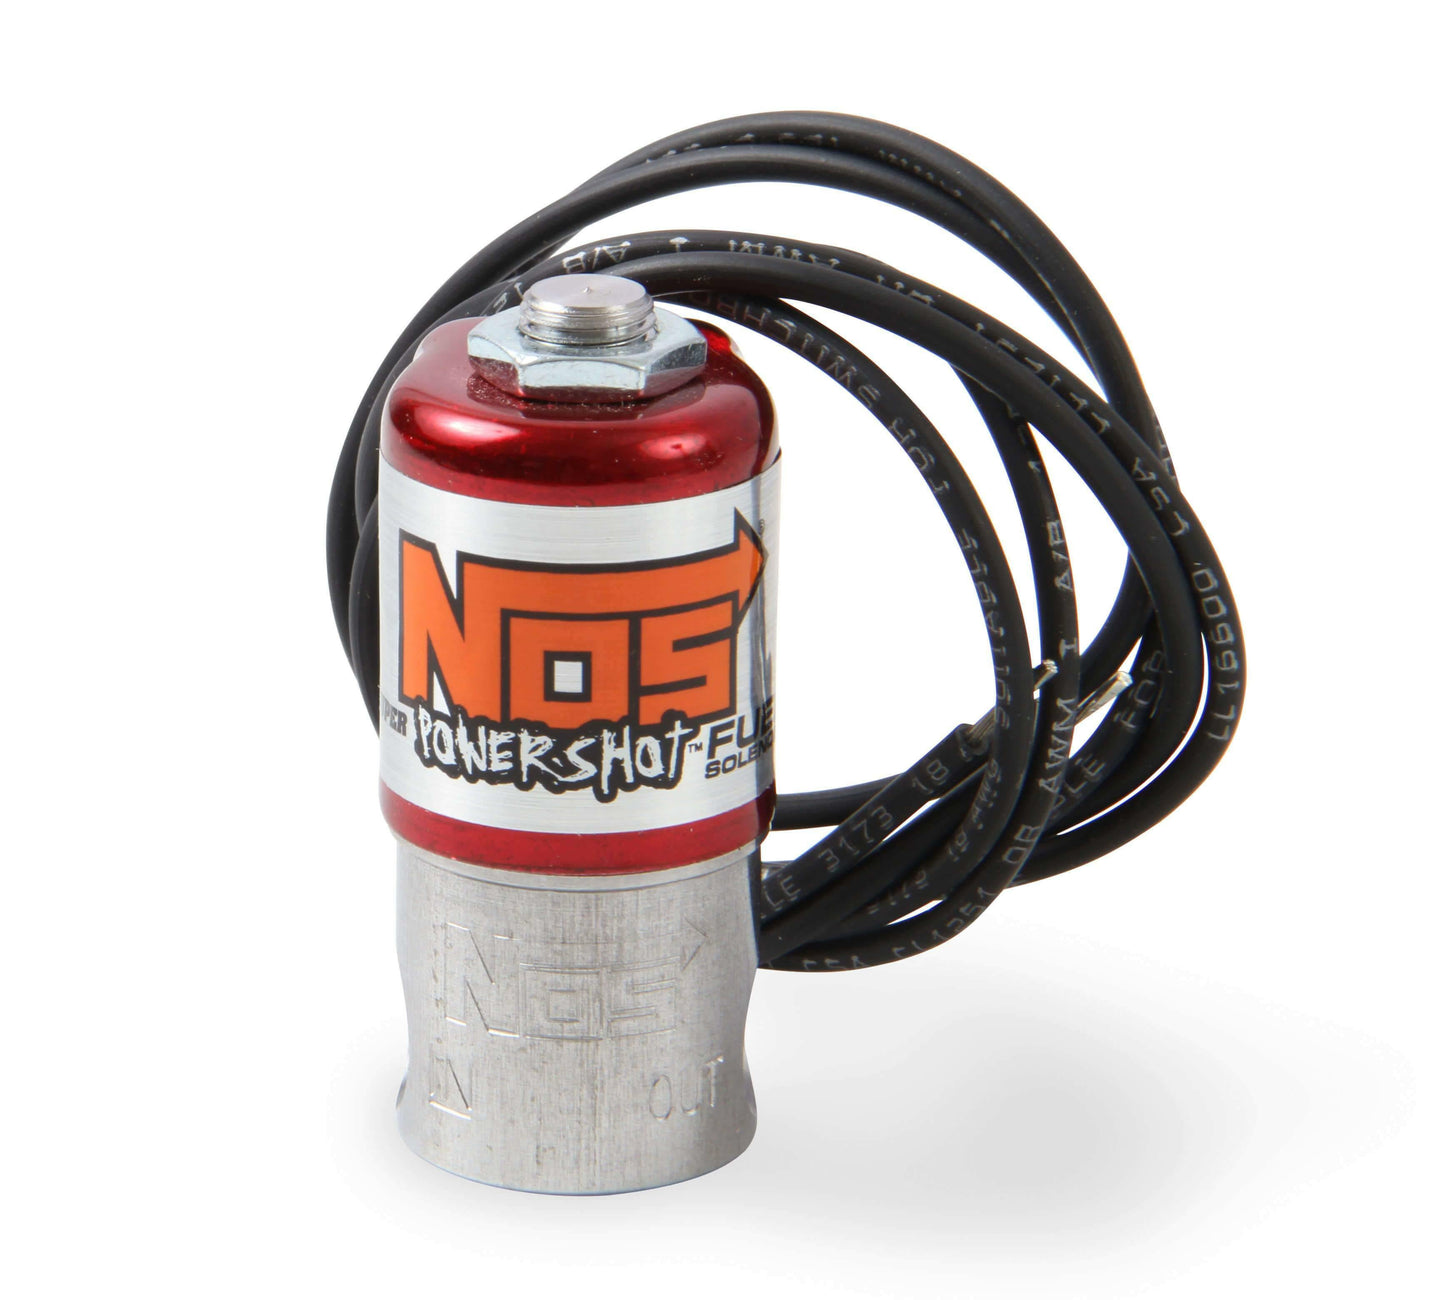 NOS Nitrous Oxide Injection System Kit 05000NOS; Powershot Wet